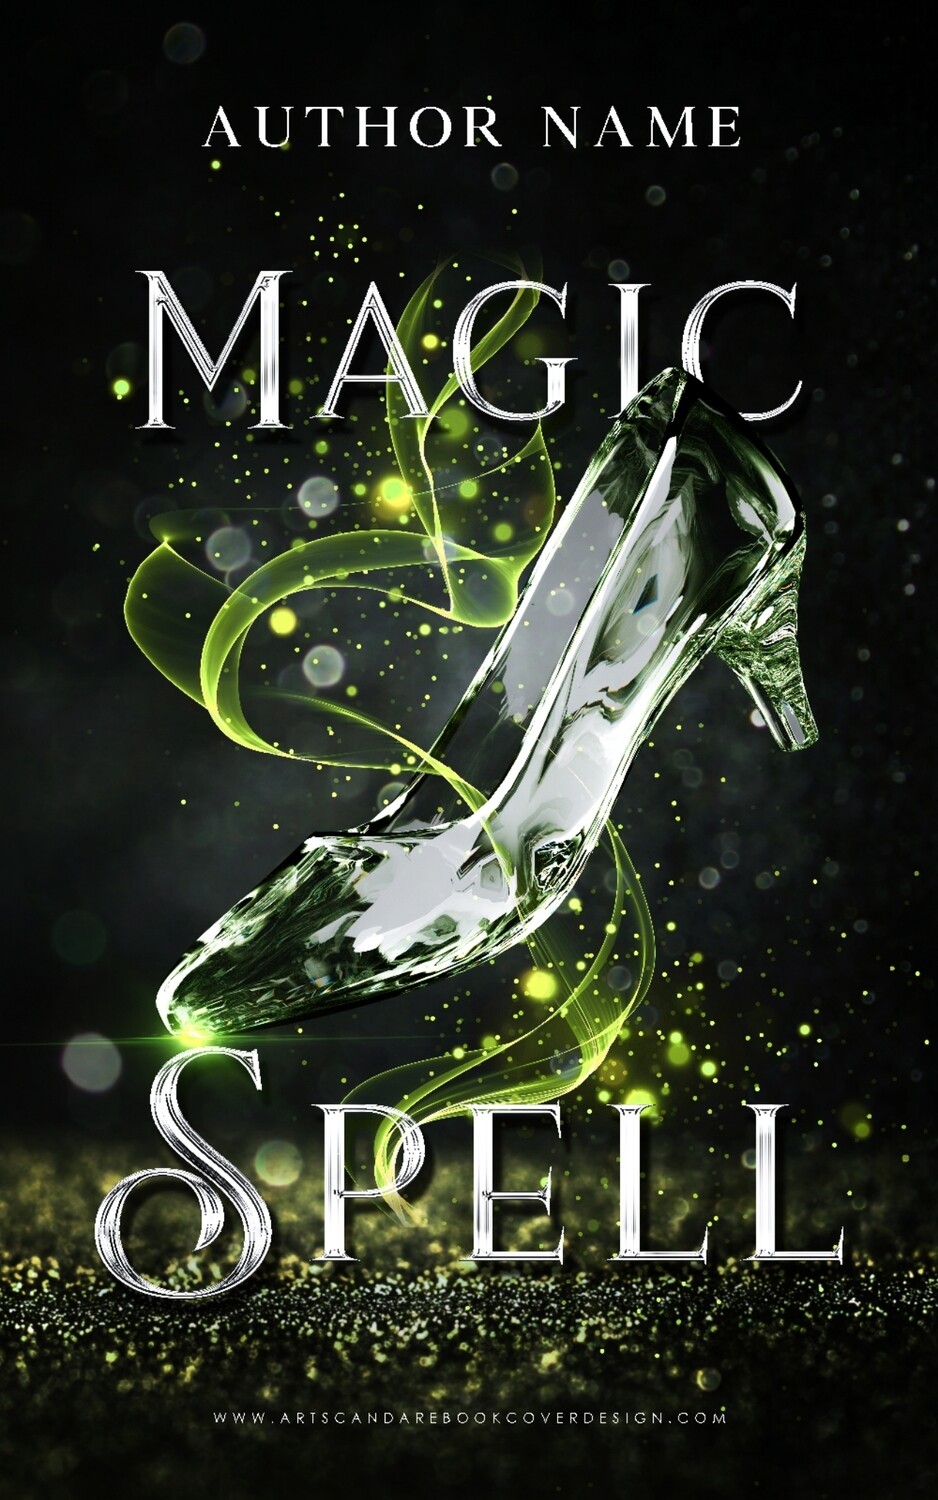 Ebook: Magic Spell